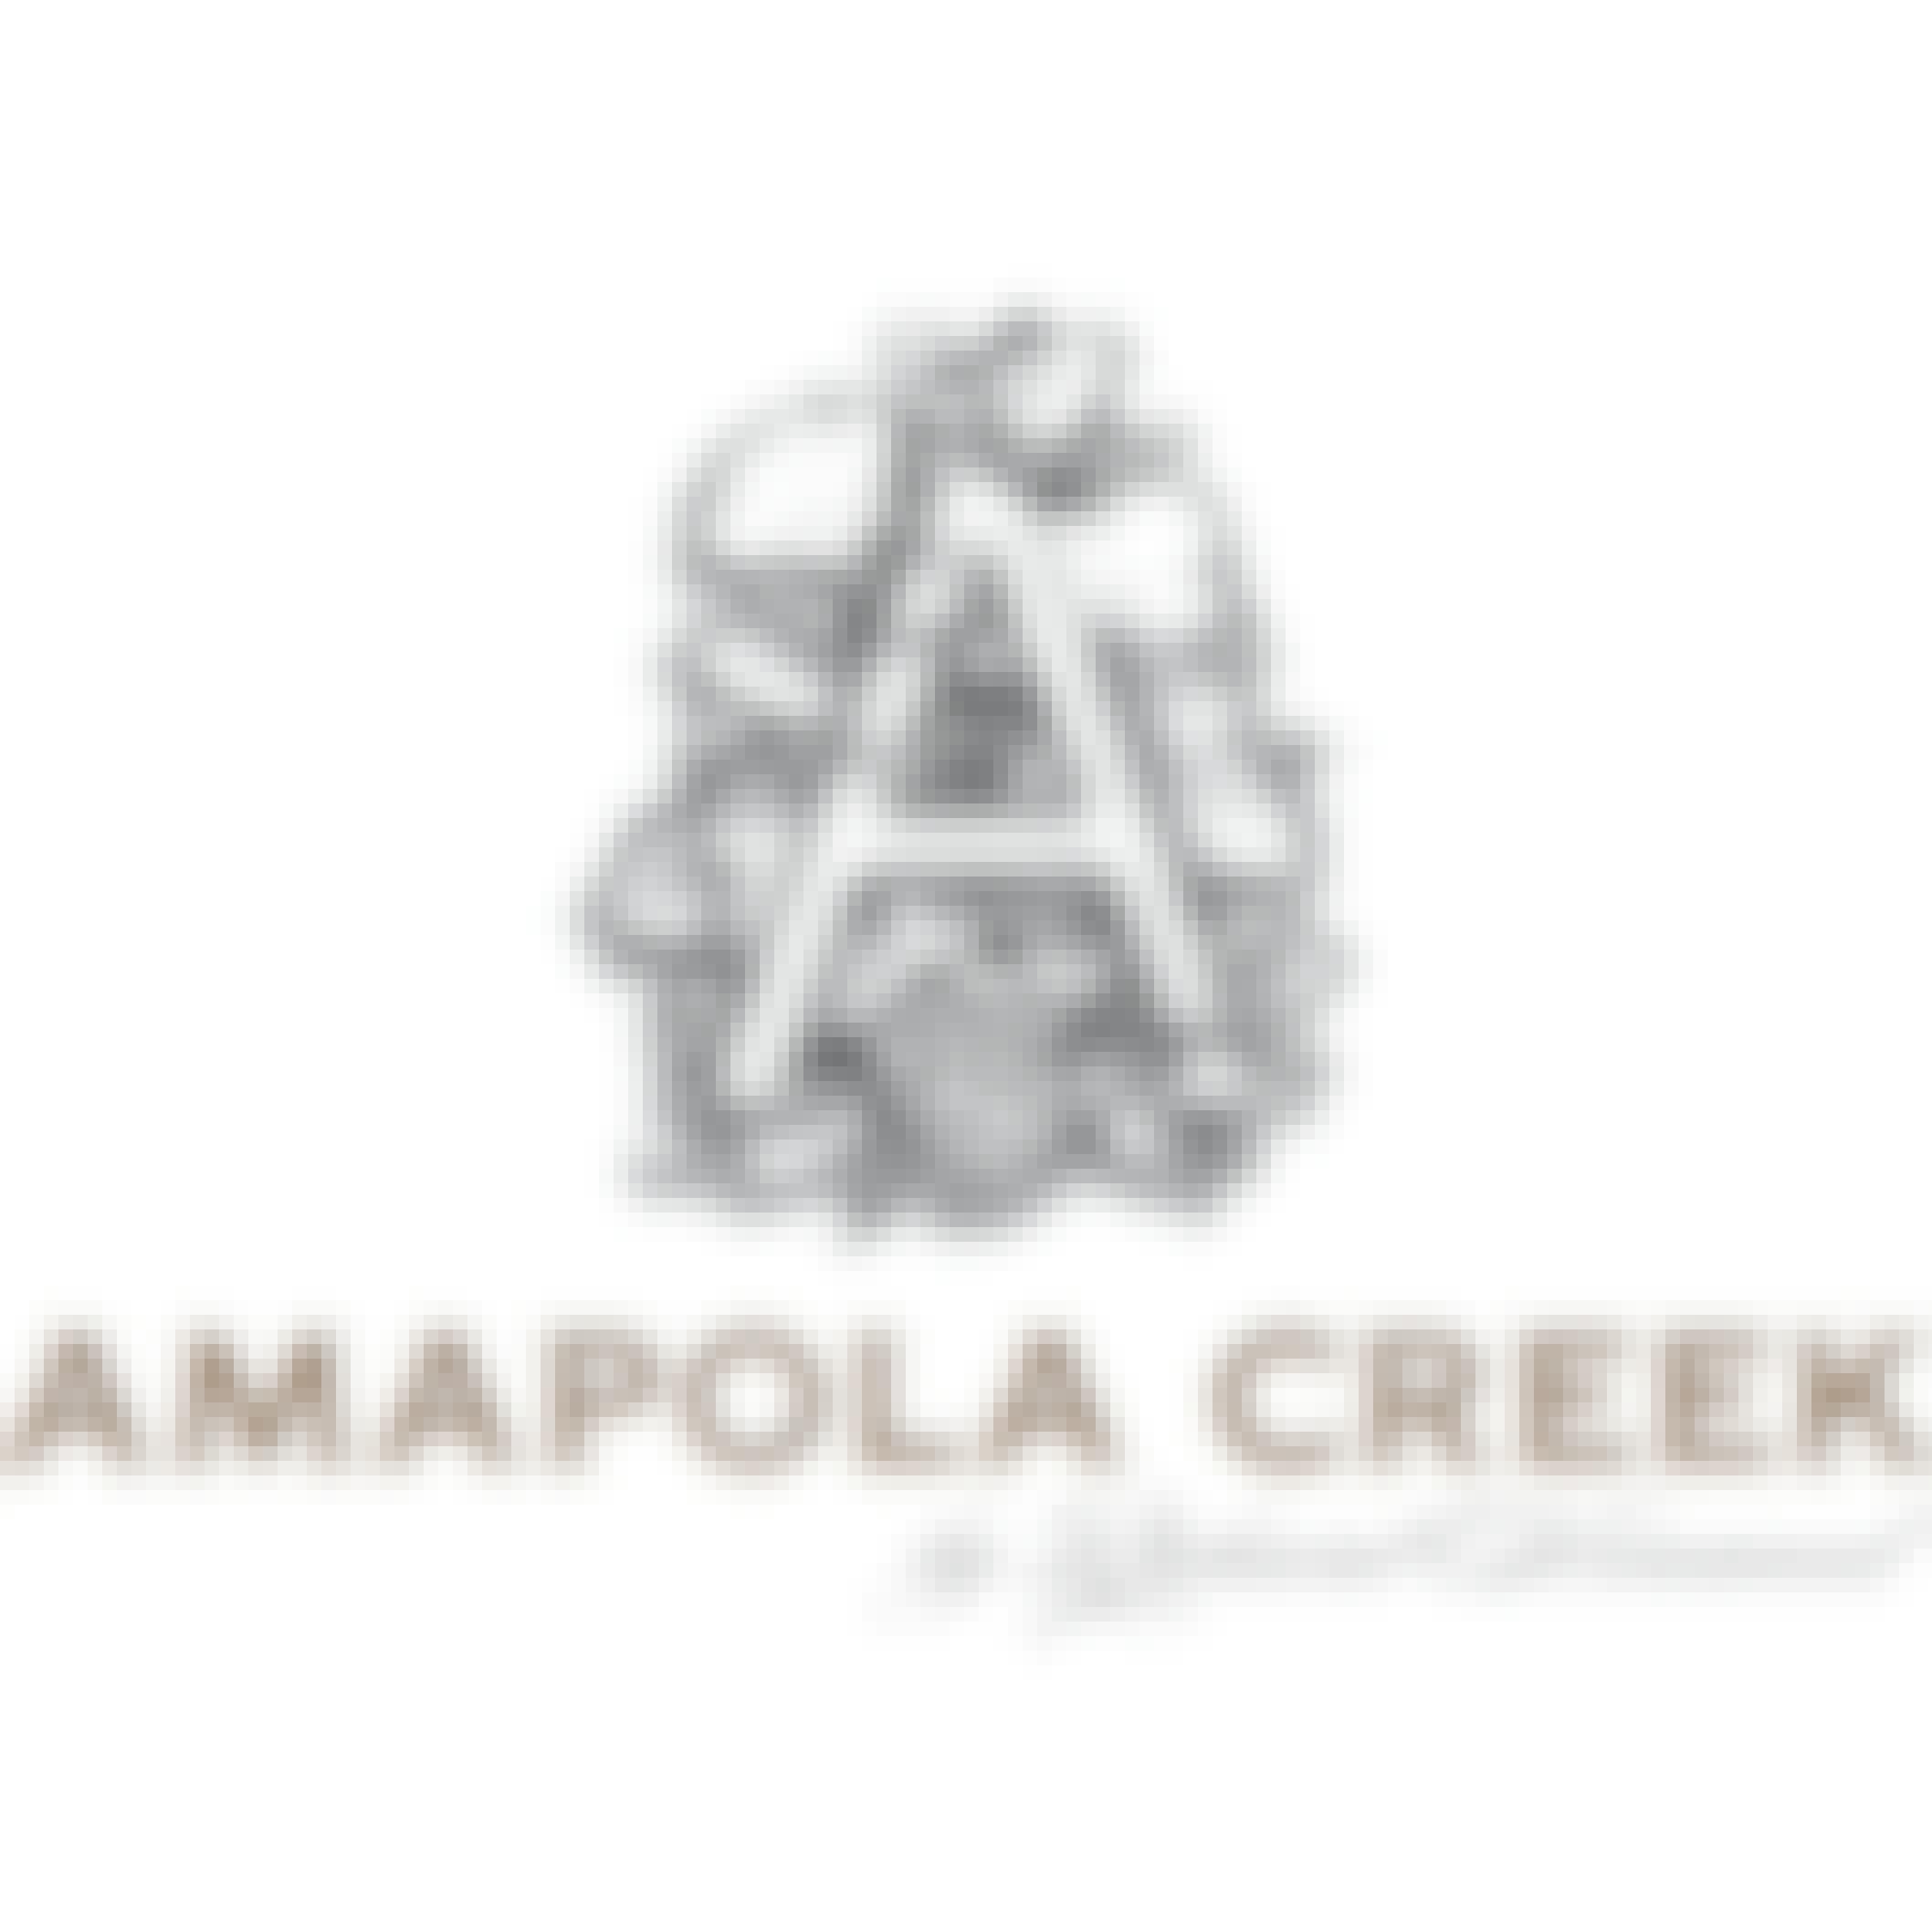 Amapola Creek Proprietary Red 750ml